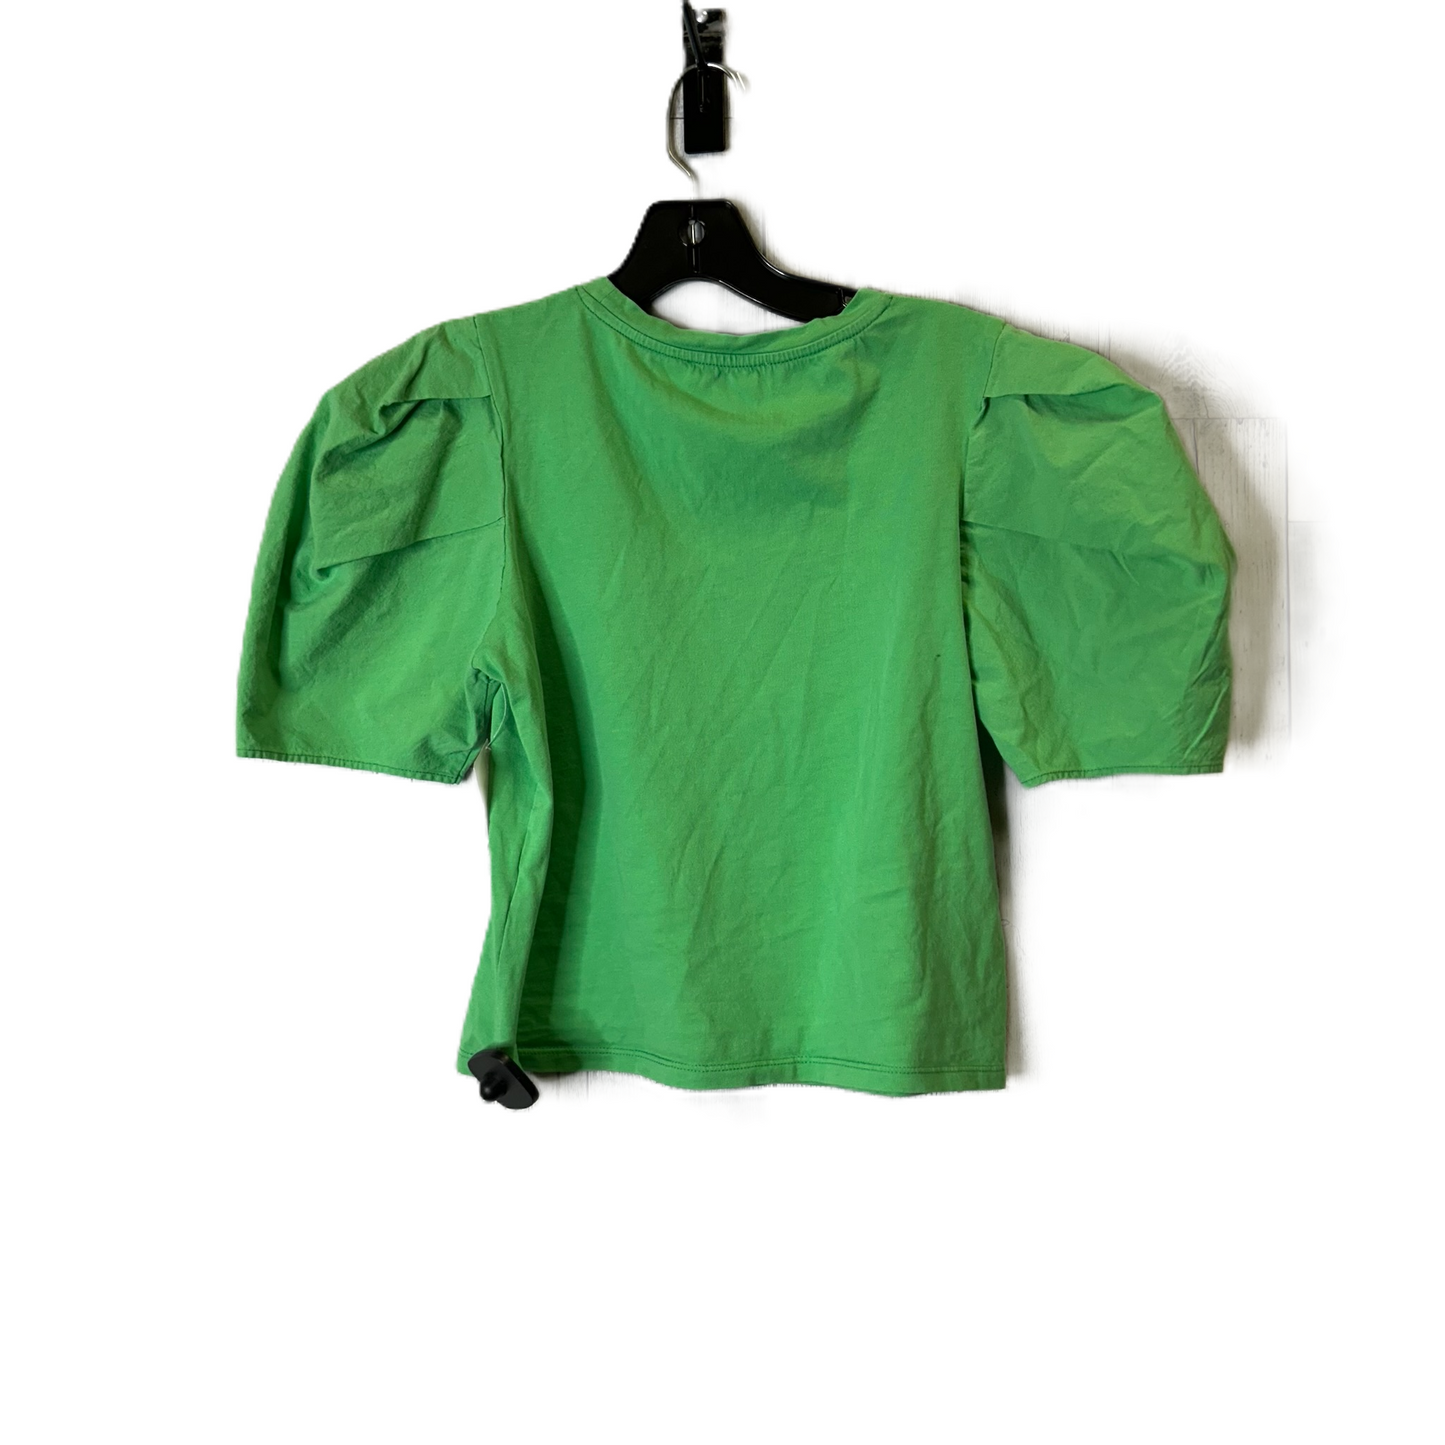 Green Top Short Sleeve By Zara, Size: M